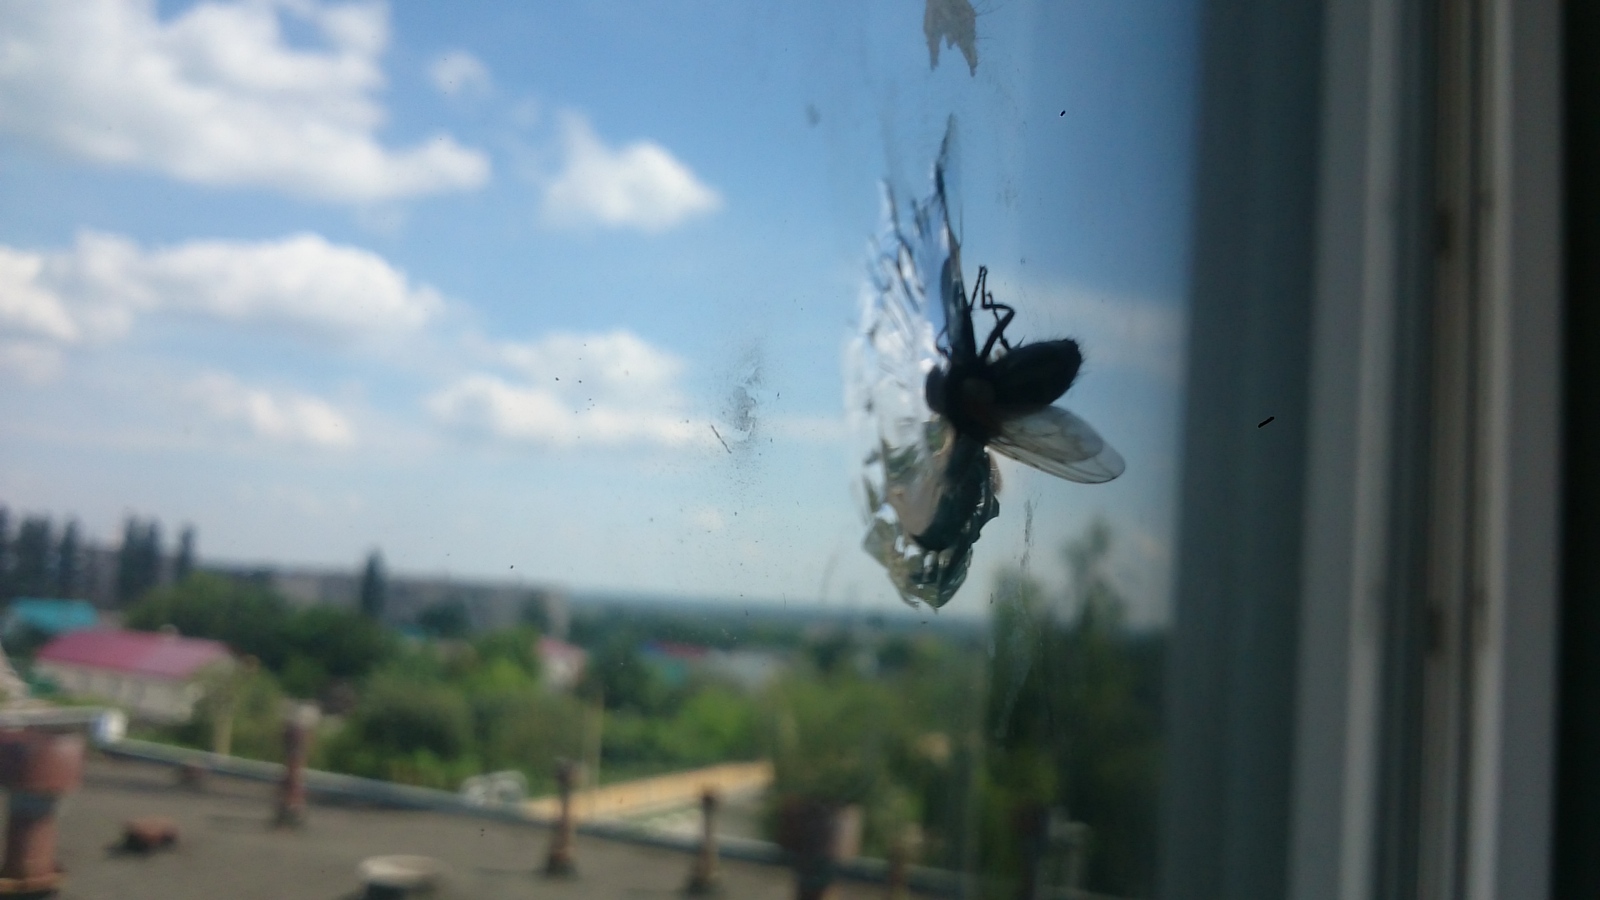 фото умершей мухи